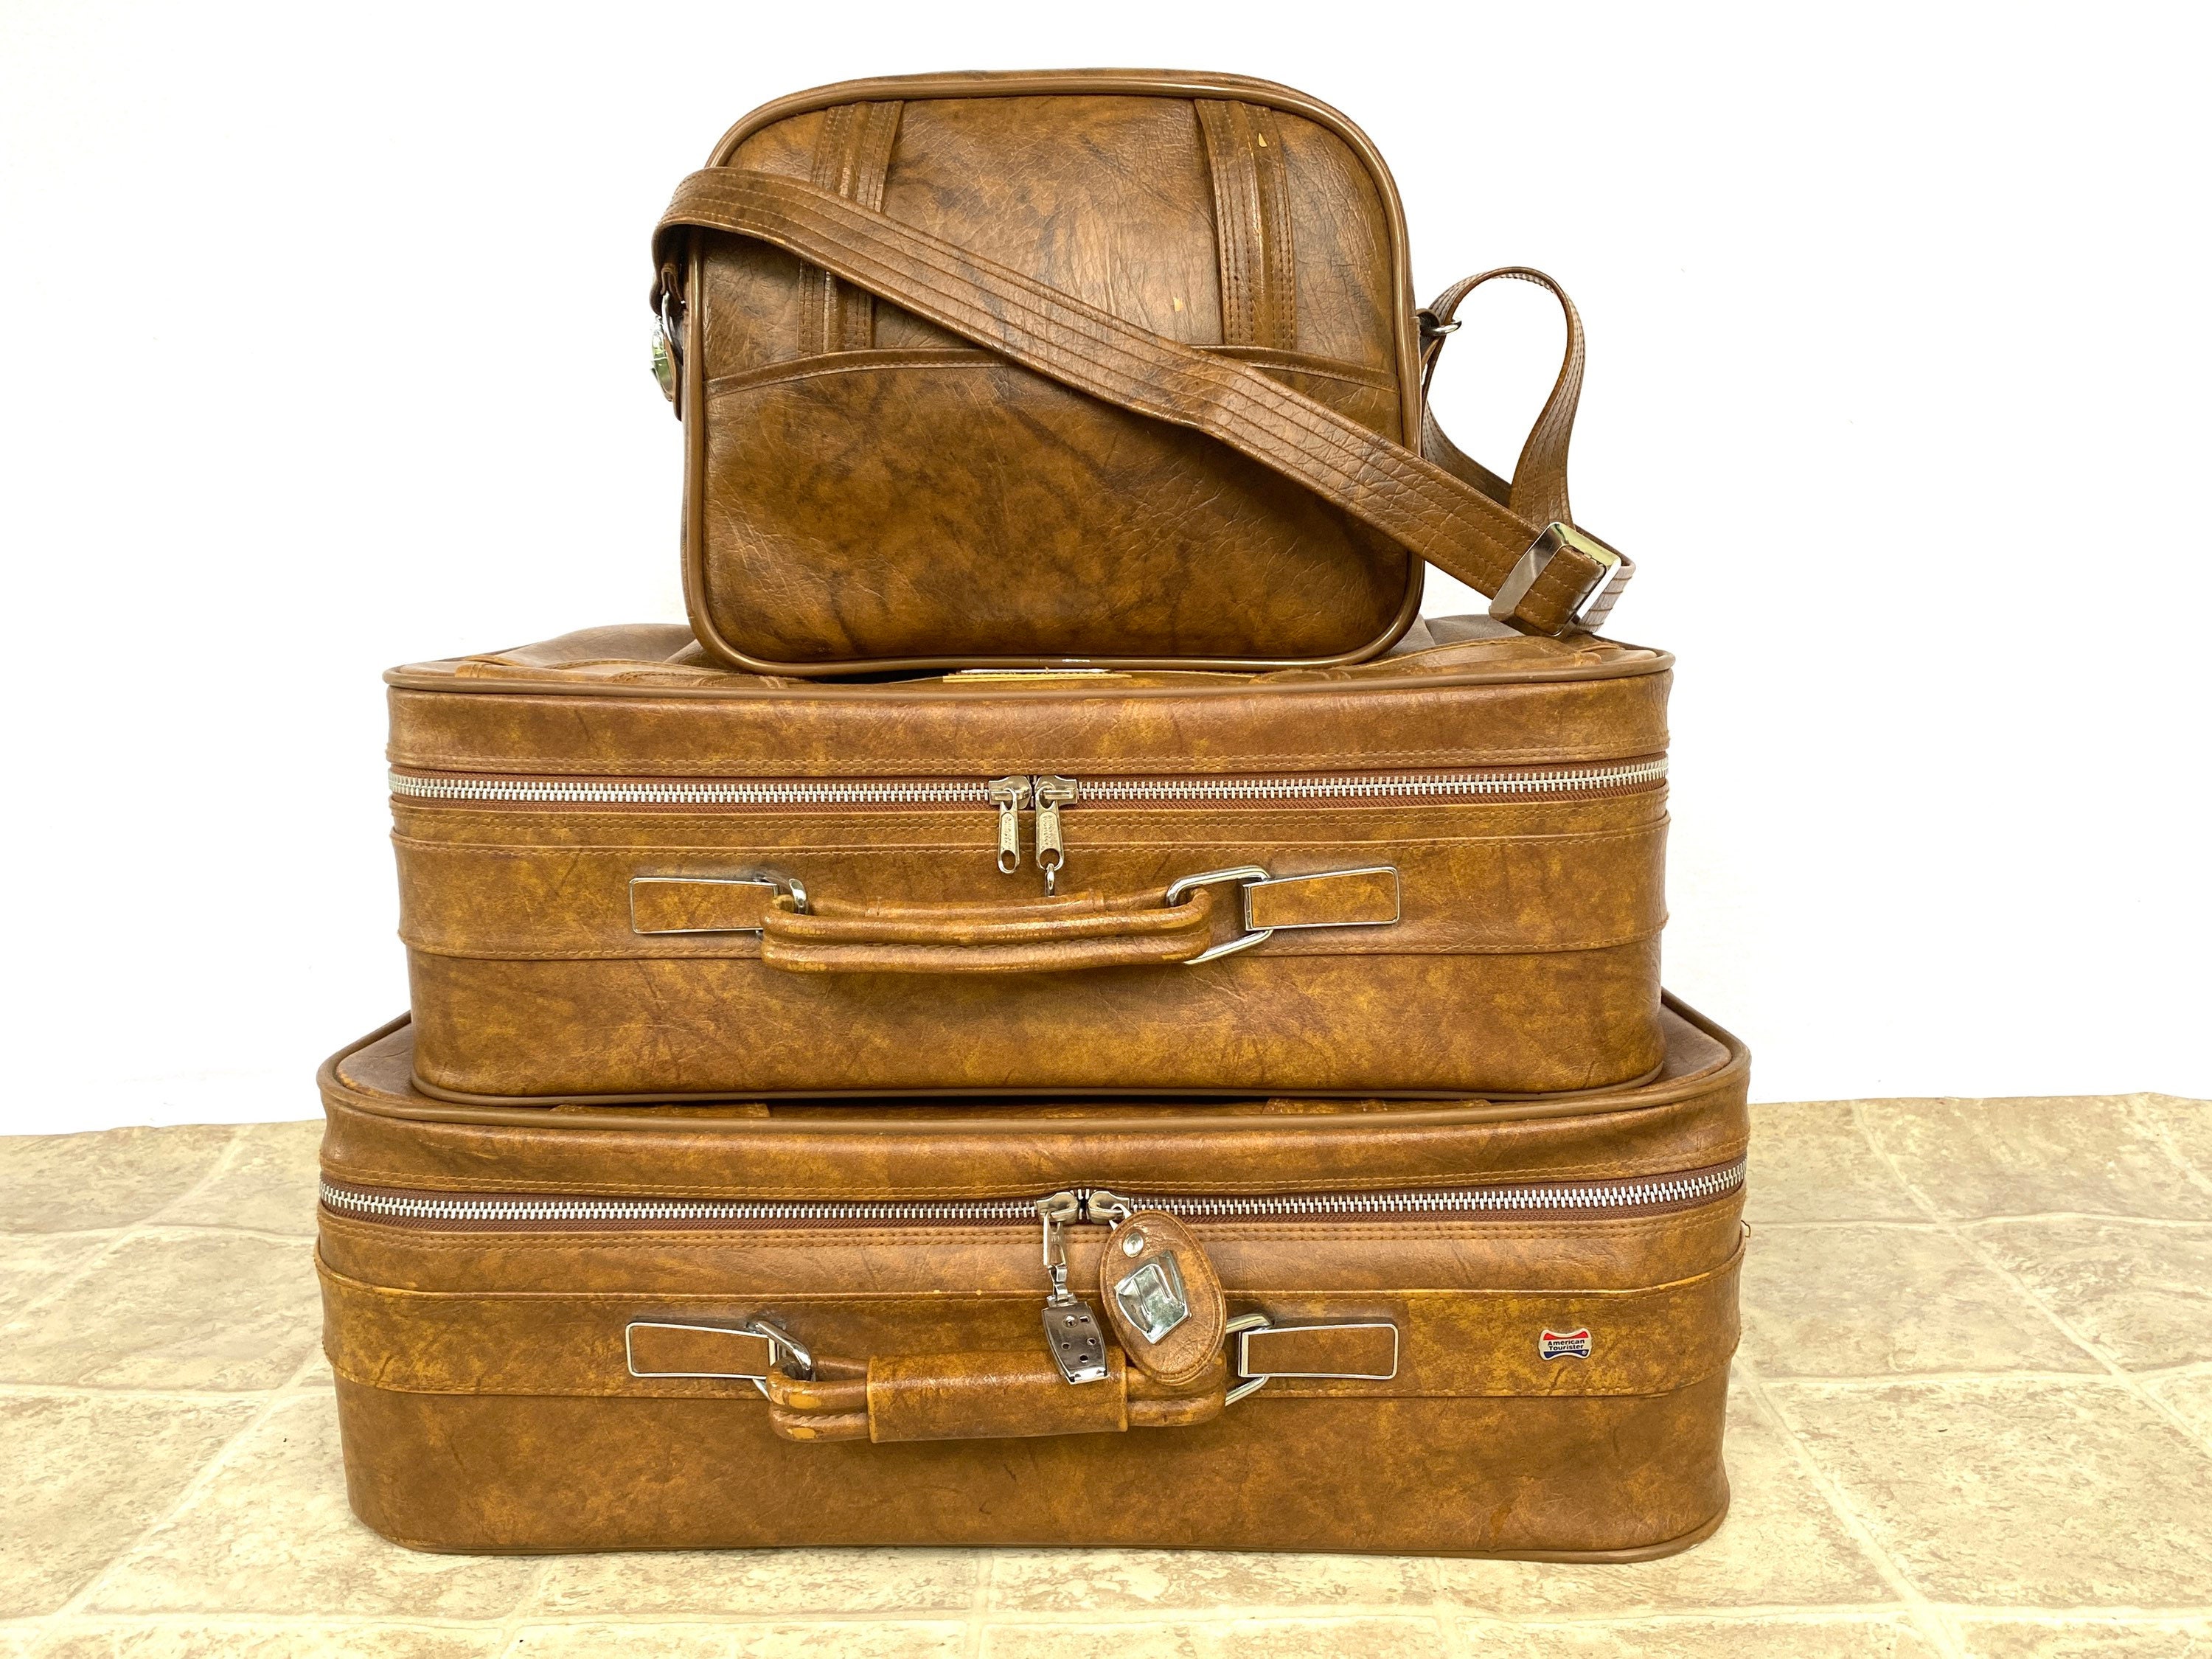 Vintage Travel Luggage - Set of 5